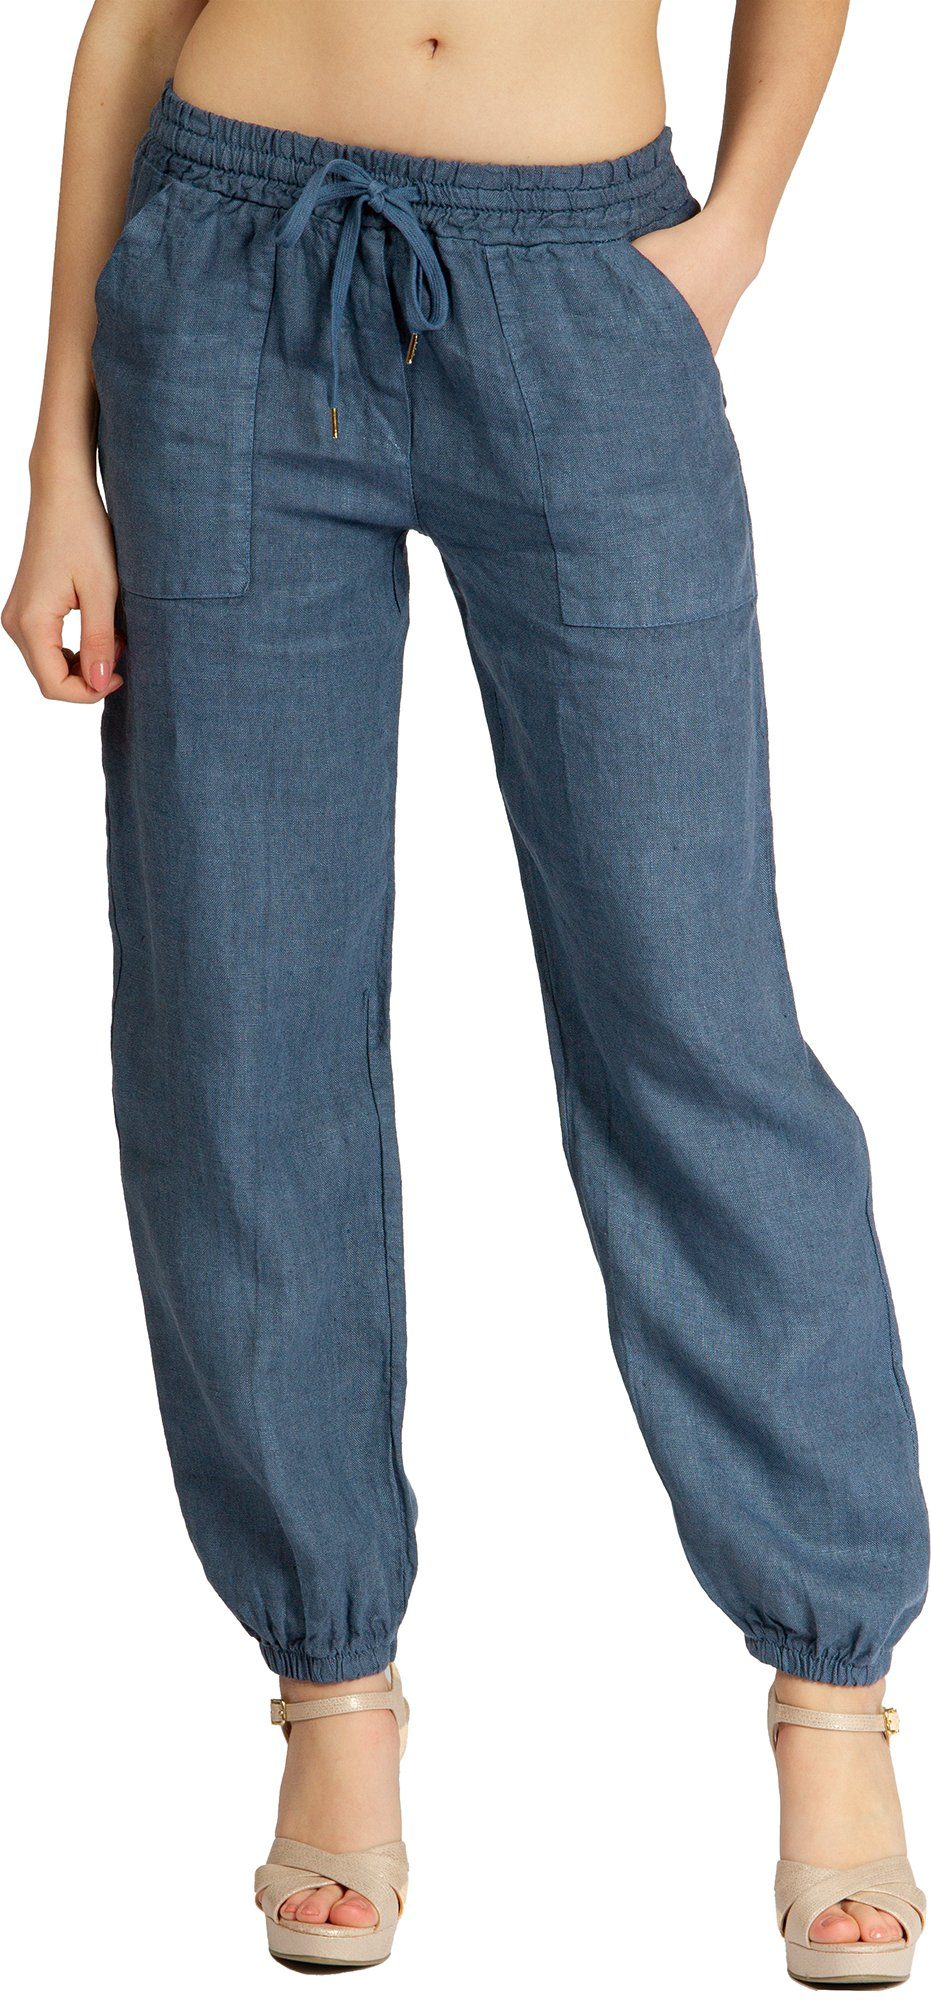 Caspar Leinenhose KHS051 elegante Damen Casual Sommer Leinenhose jeans blau | Leinenhosen